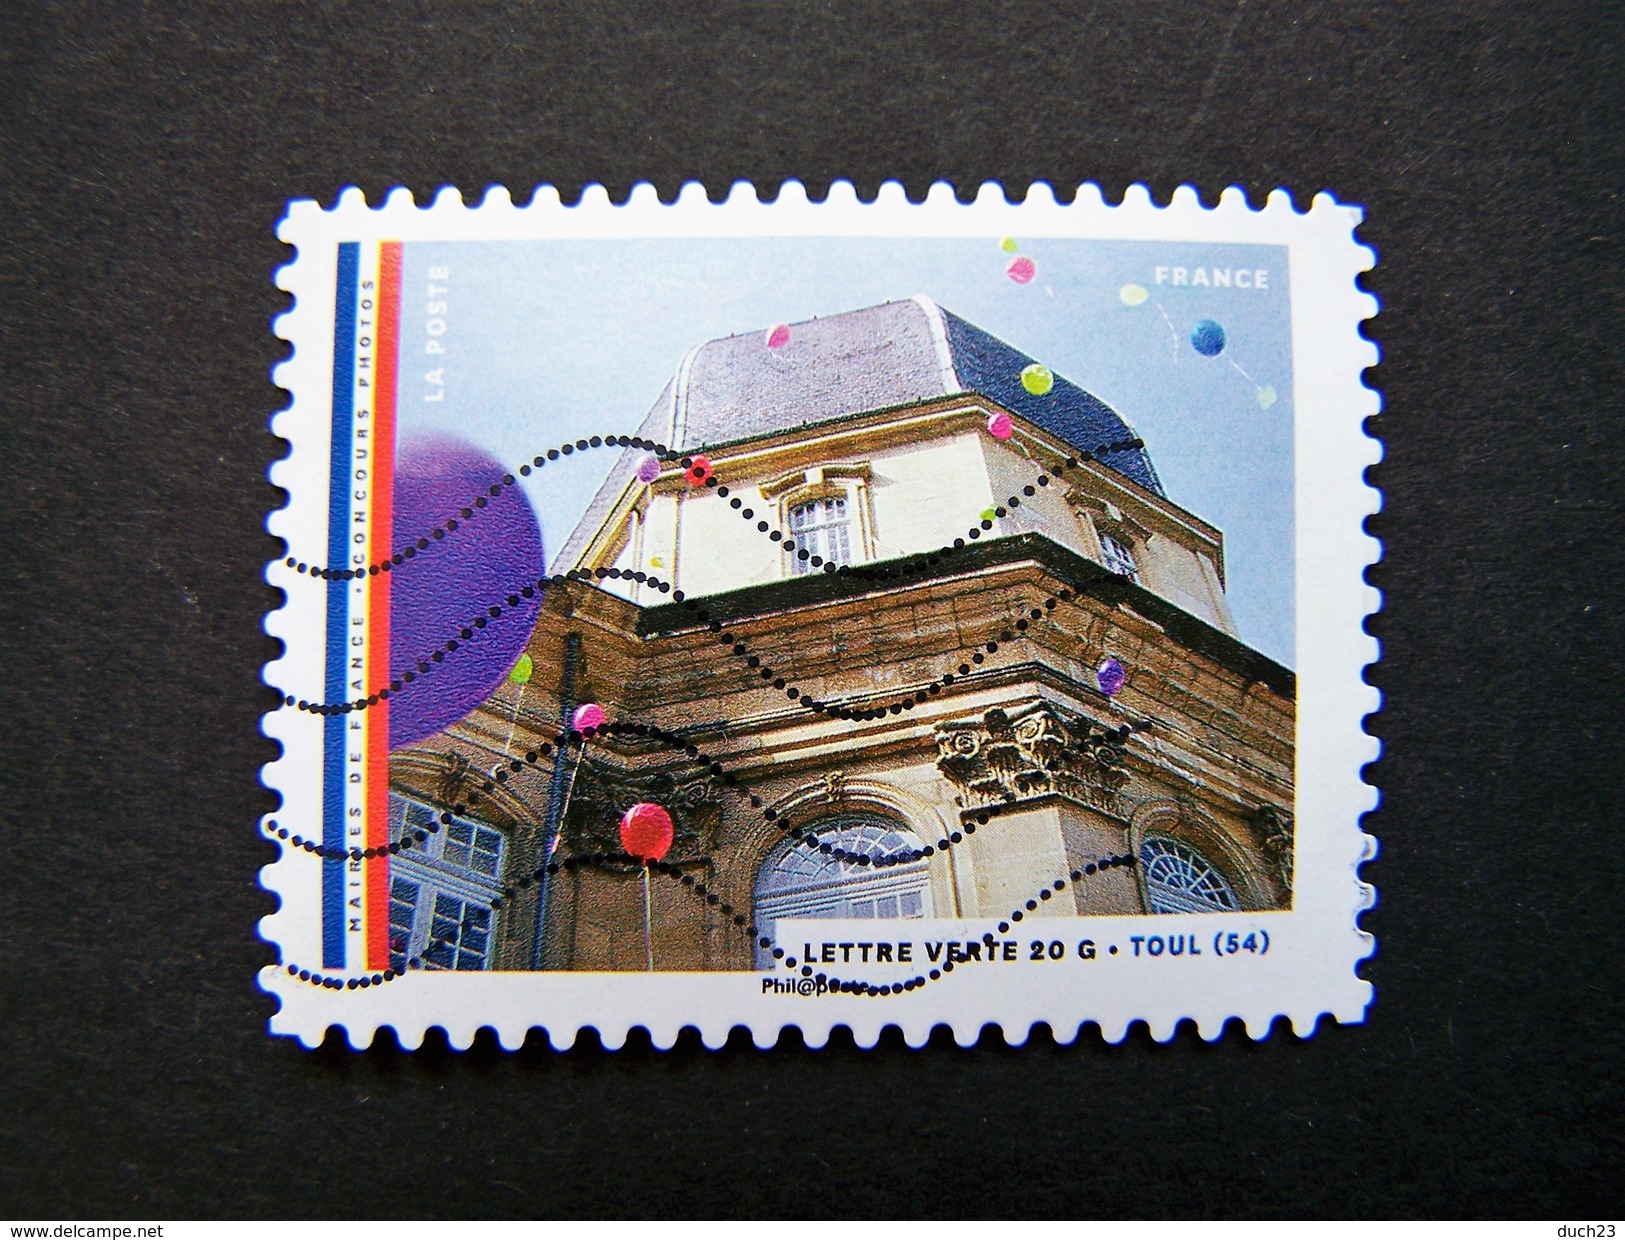 N° 1212 TOUL OBLITERE ANNEE 2015 SERIE DU CARNET LES MAIRIES DE FRANCE AUTOCOLLANT ADHESIF - Used Stamps